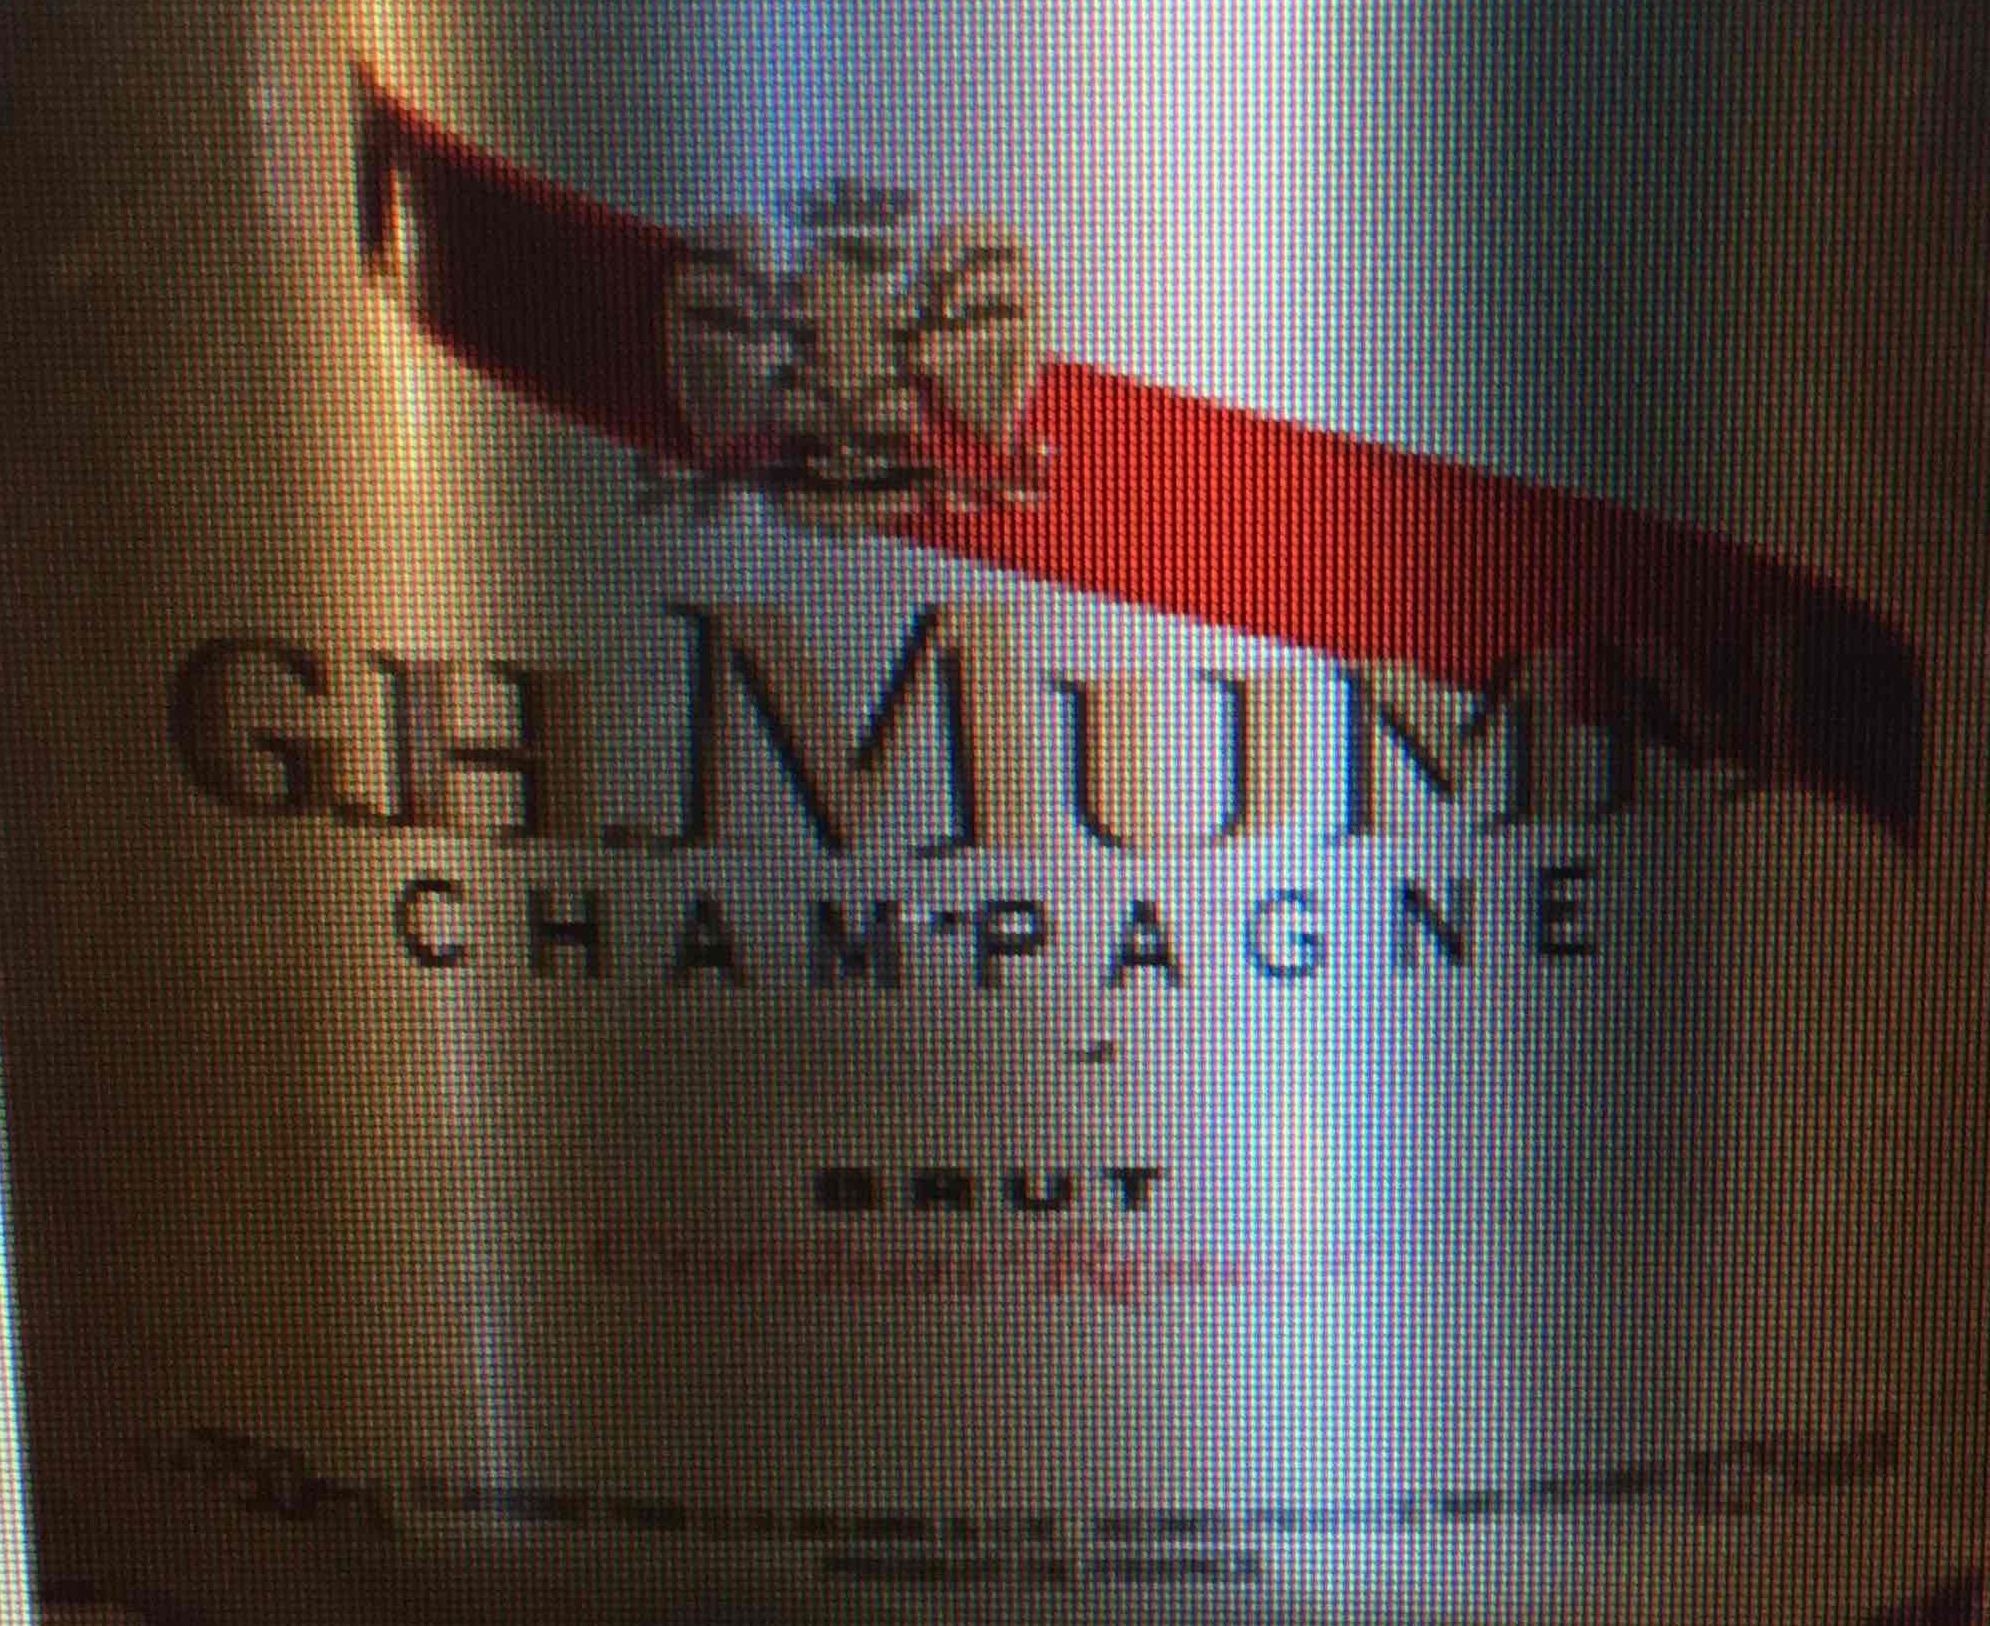 G.H.Mumm  Champagne Cordon Rouge – WineStatistics